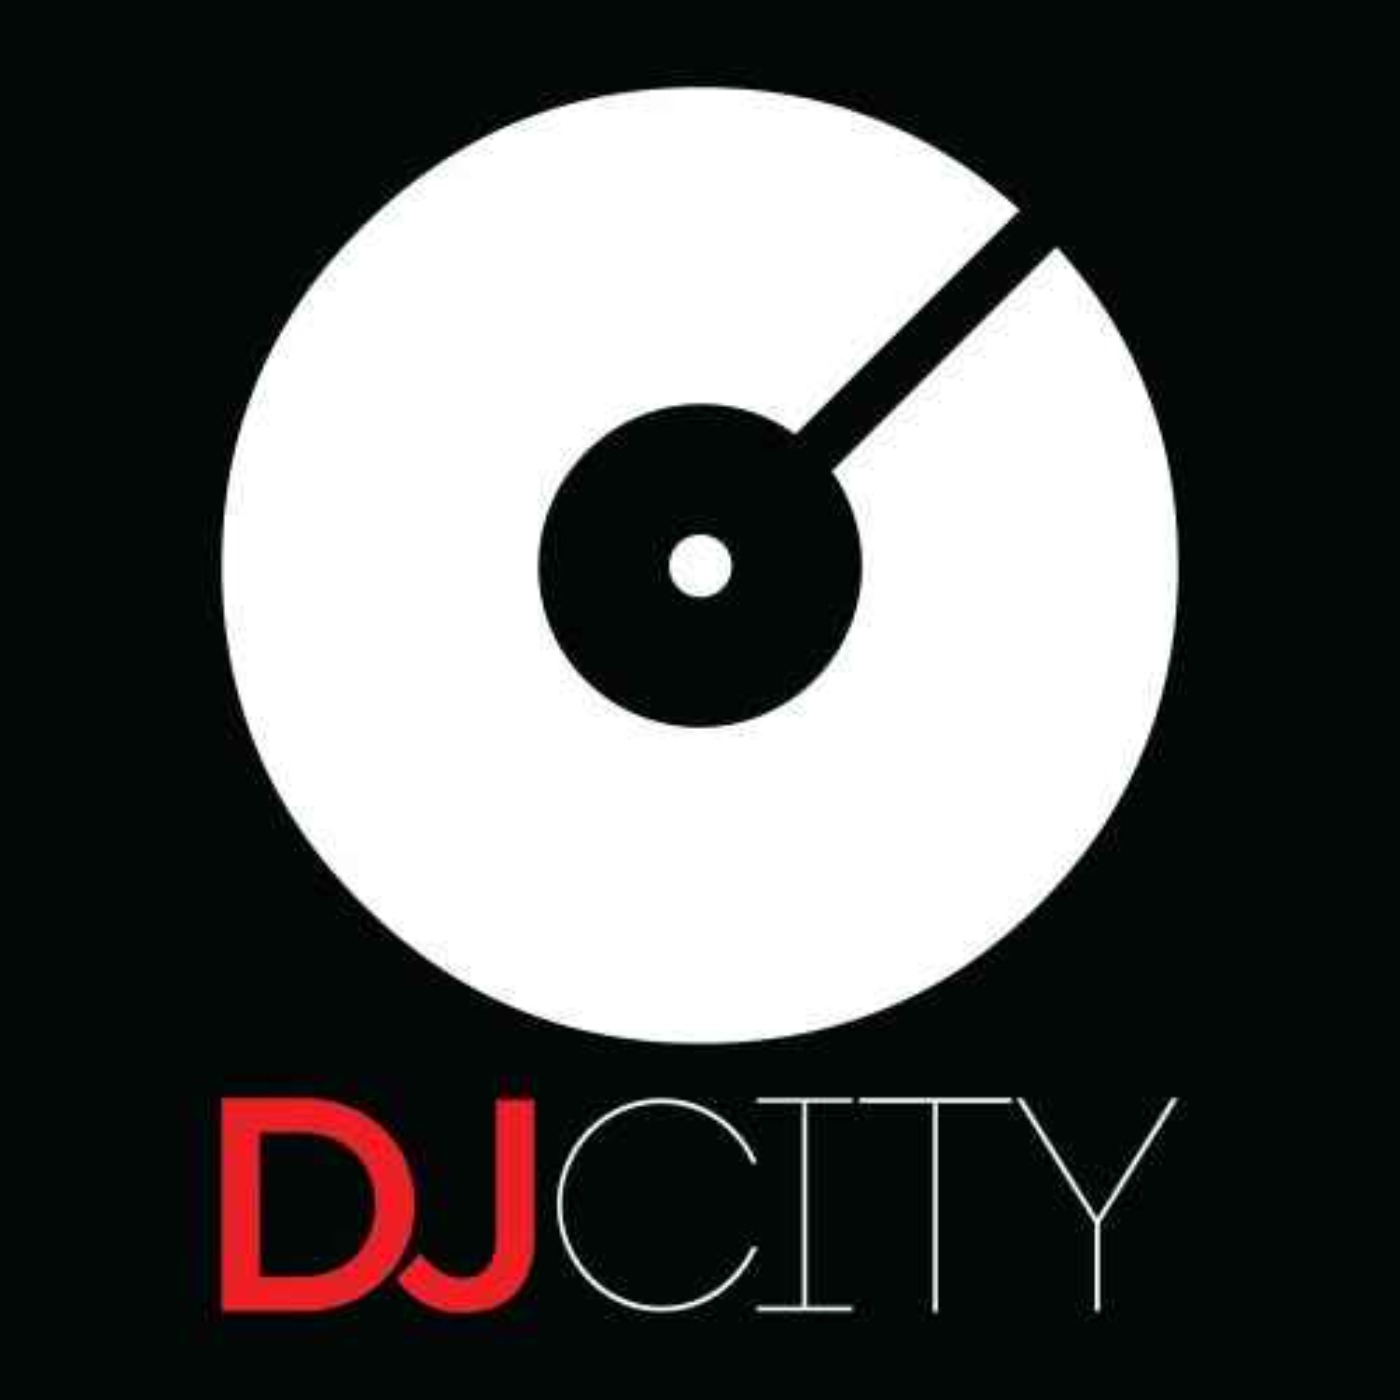 DJcity Records' Podcast